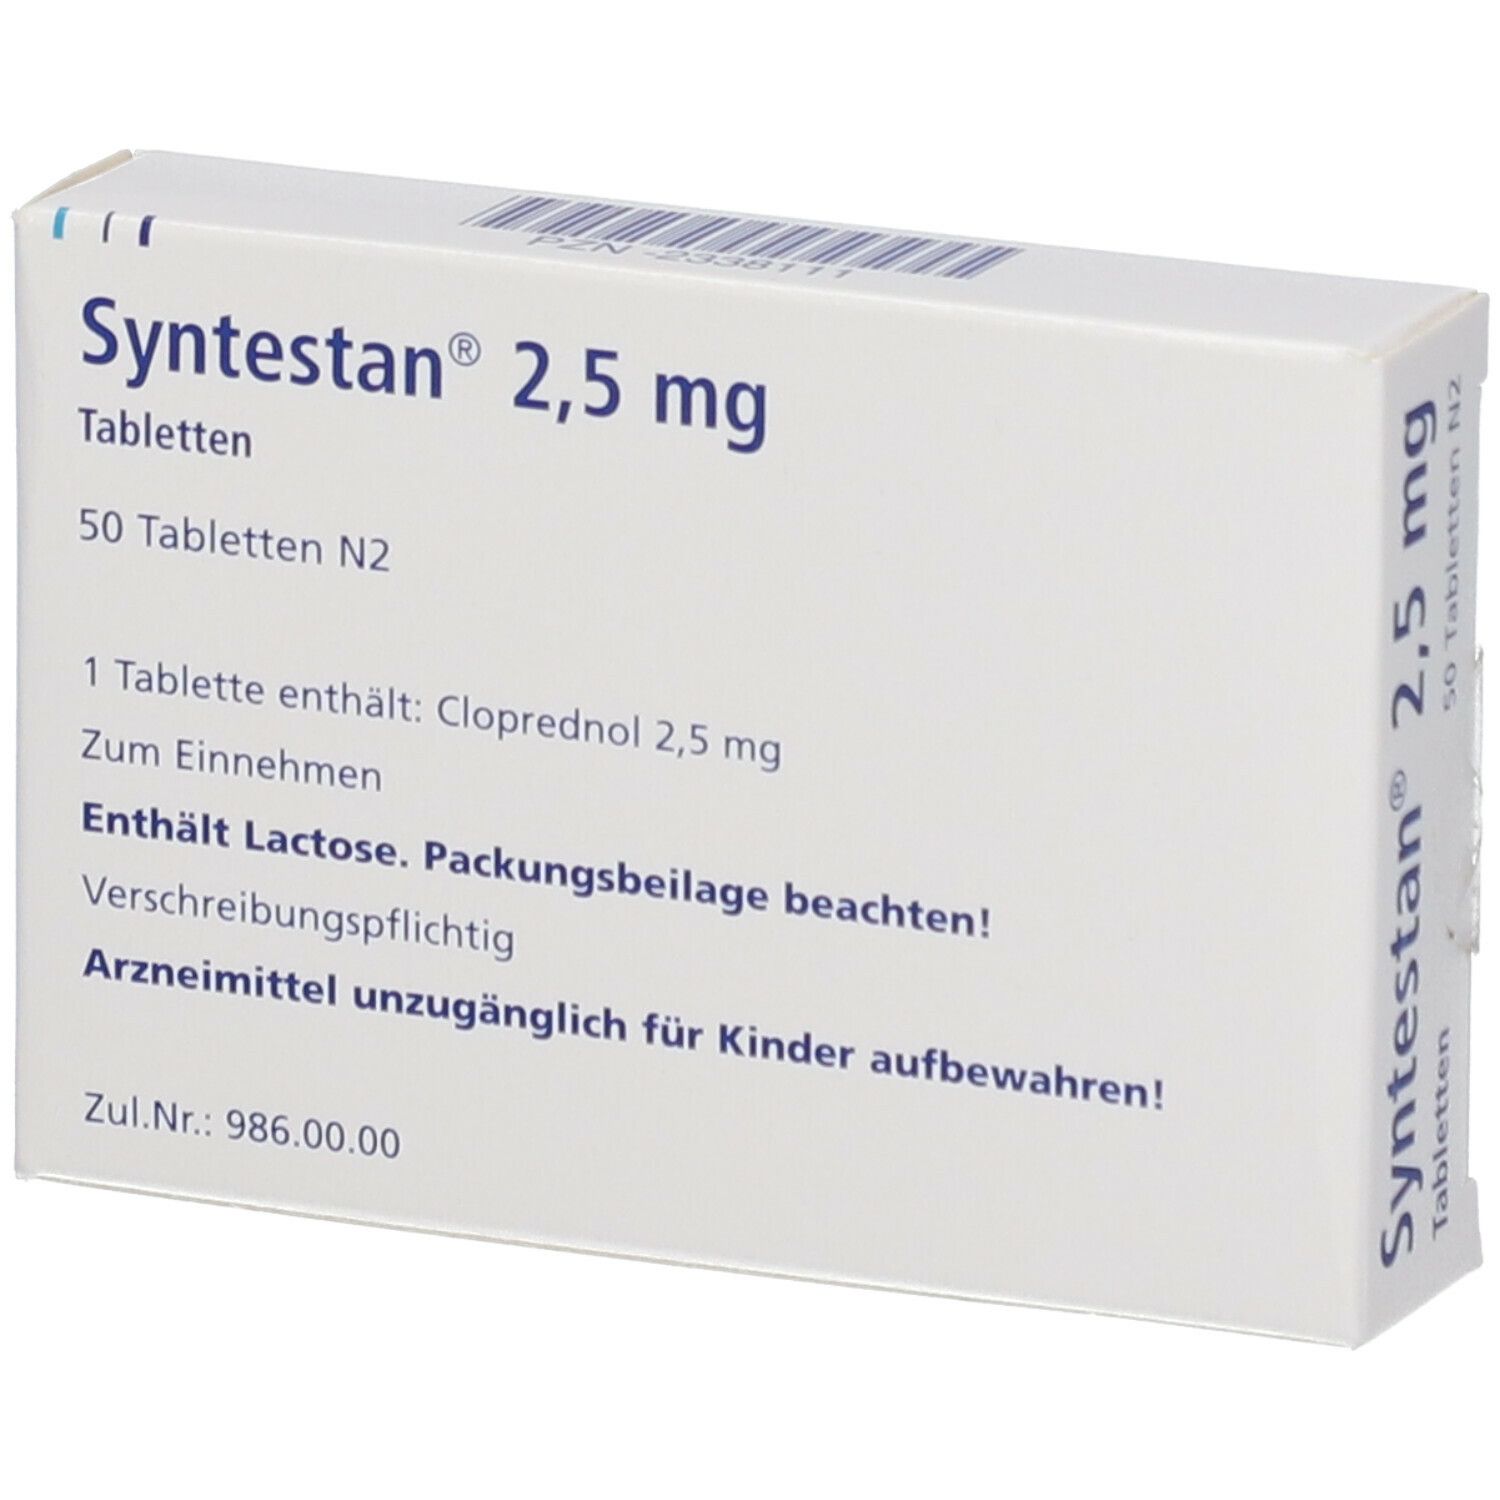 Syntestan® 2,5 mg